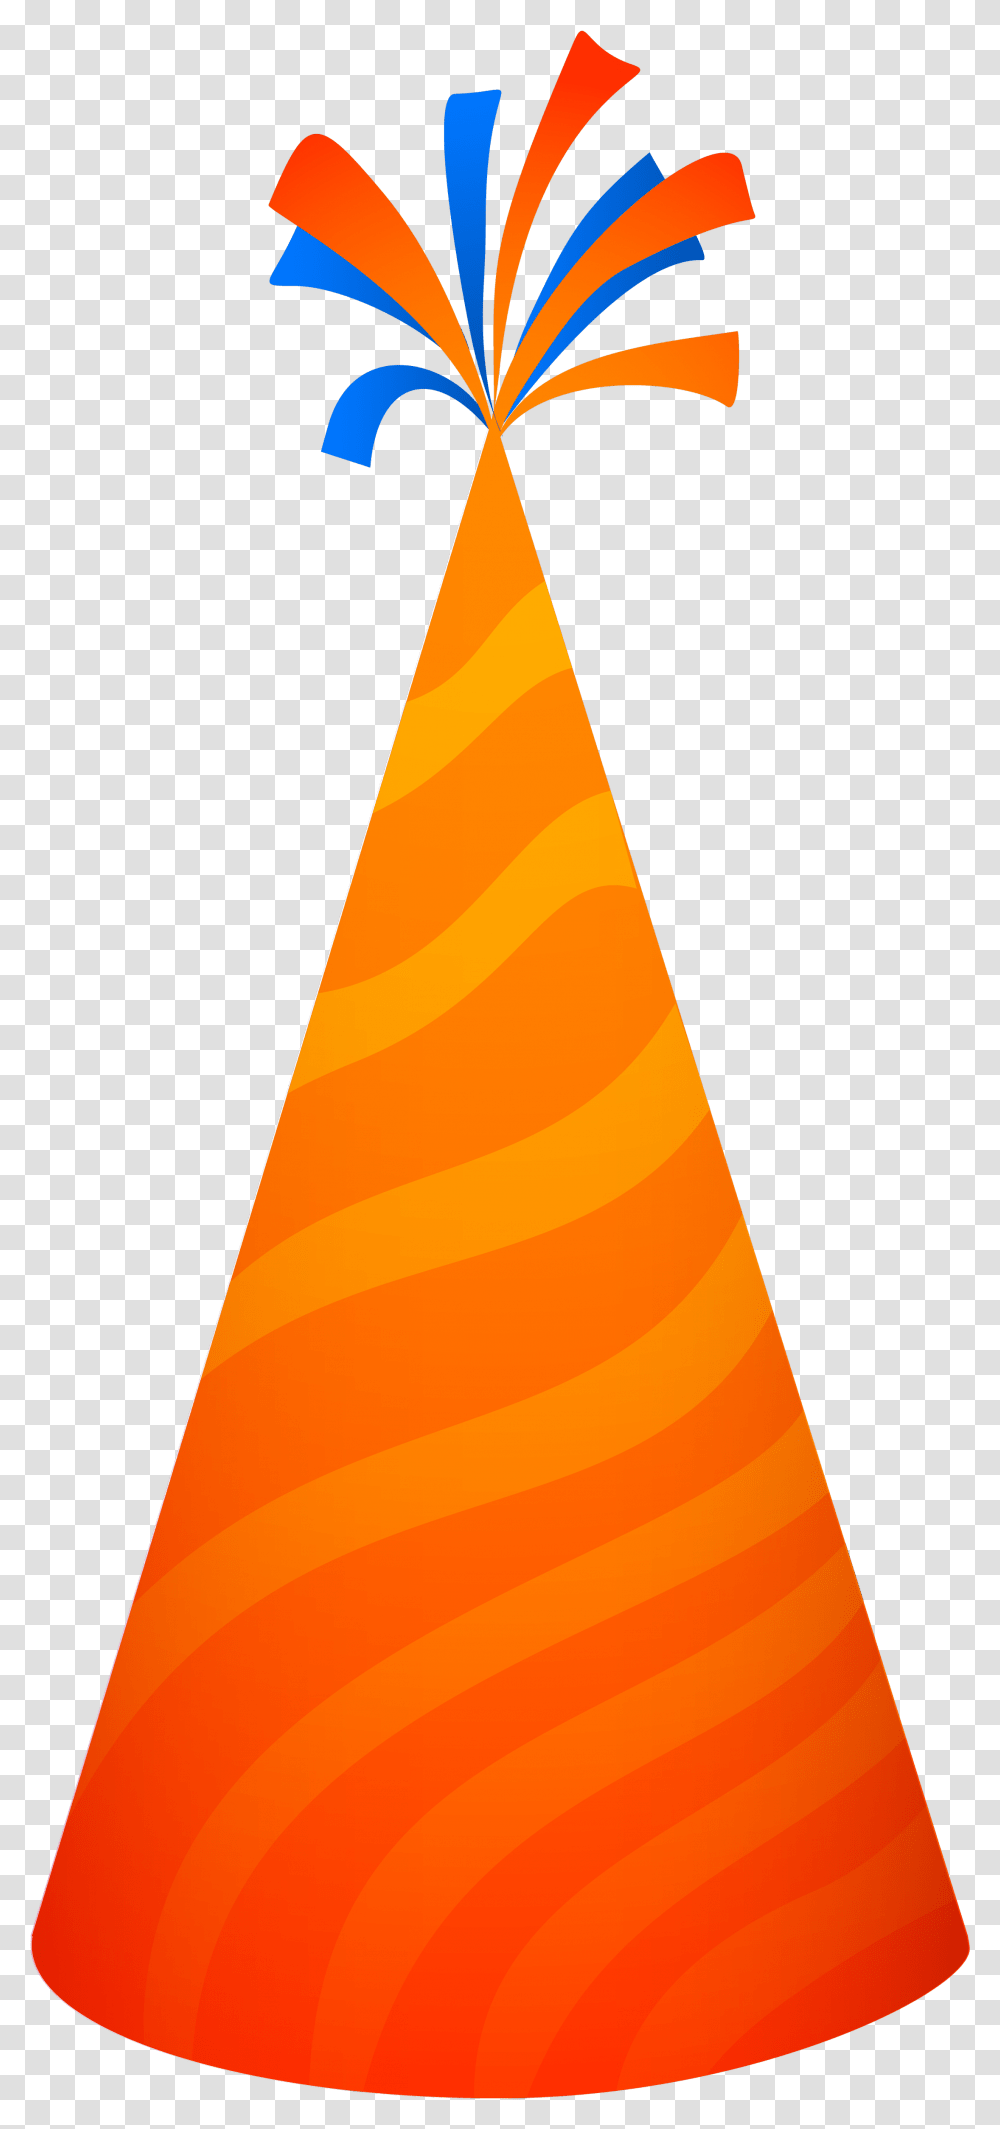 Party Hat Image Pngpix Party Hat Orange, Cone, Clothing, Apparel Transparent Png